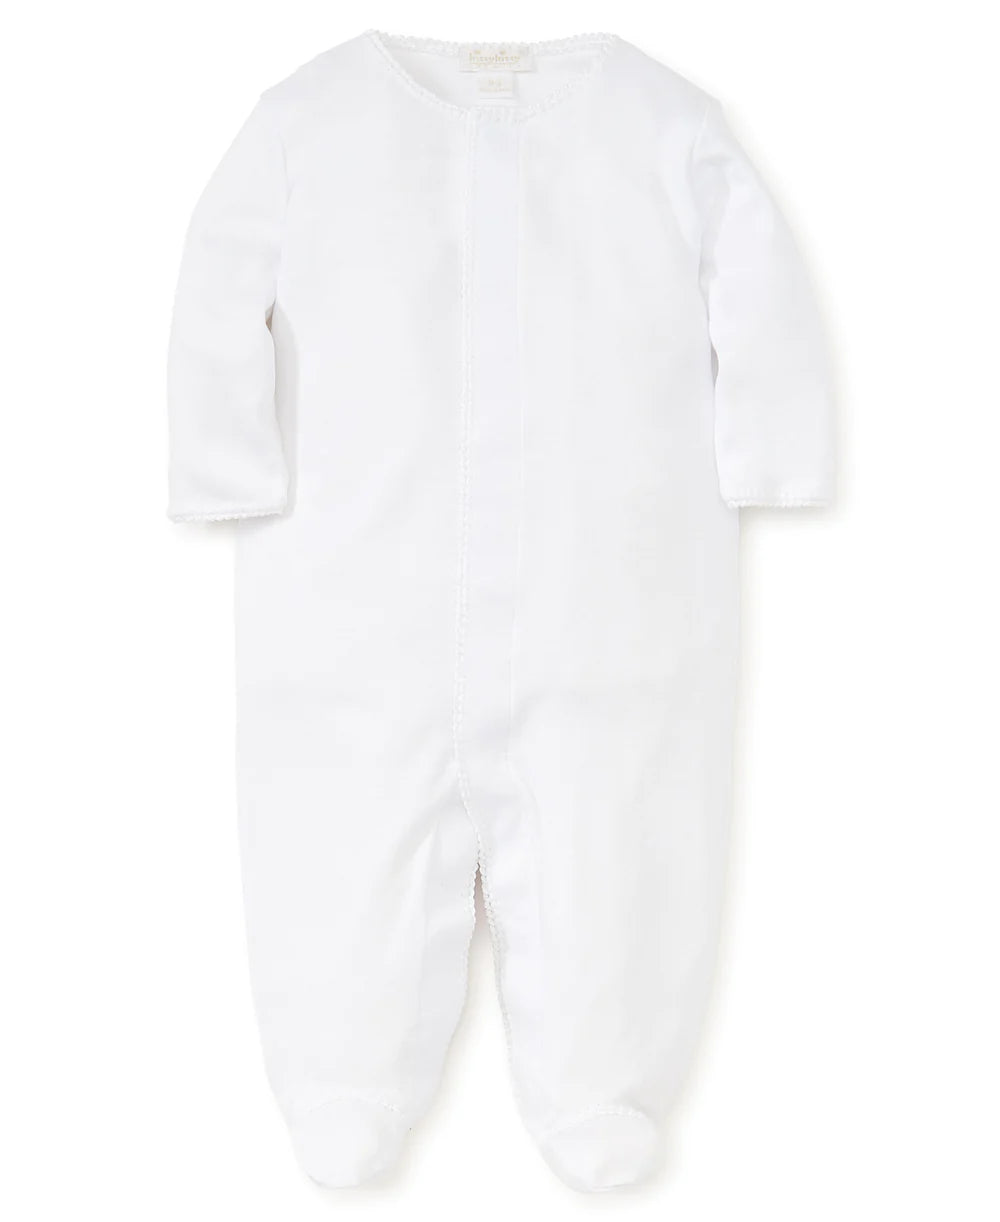 New Premier Basics Footie - White/White - Breckenridge Baby